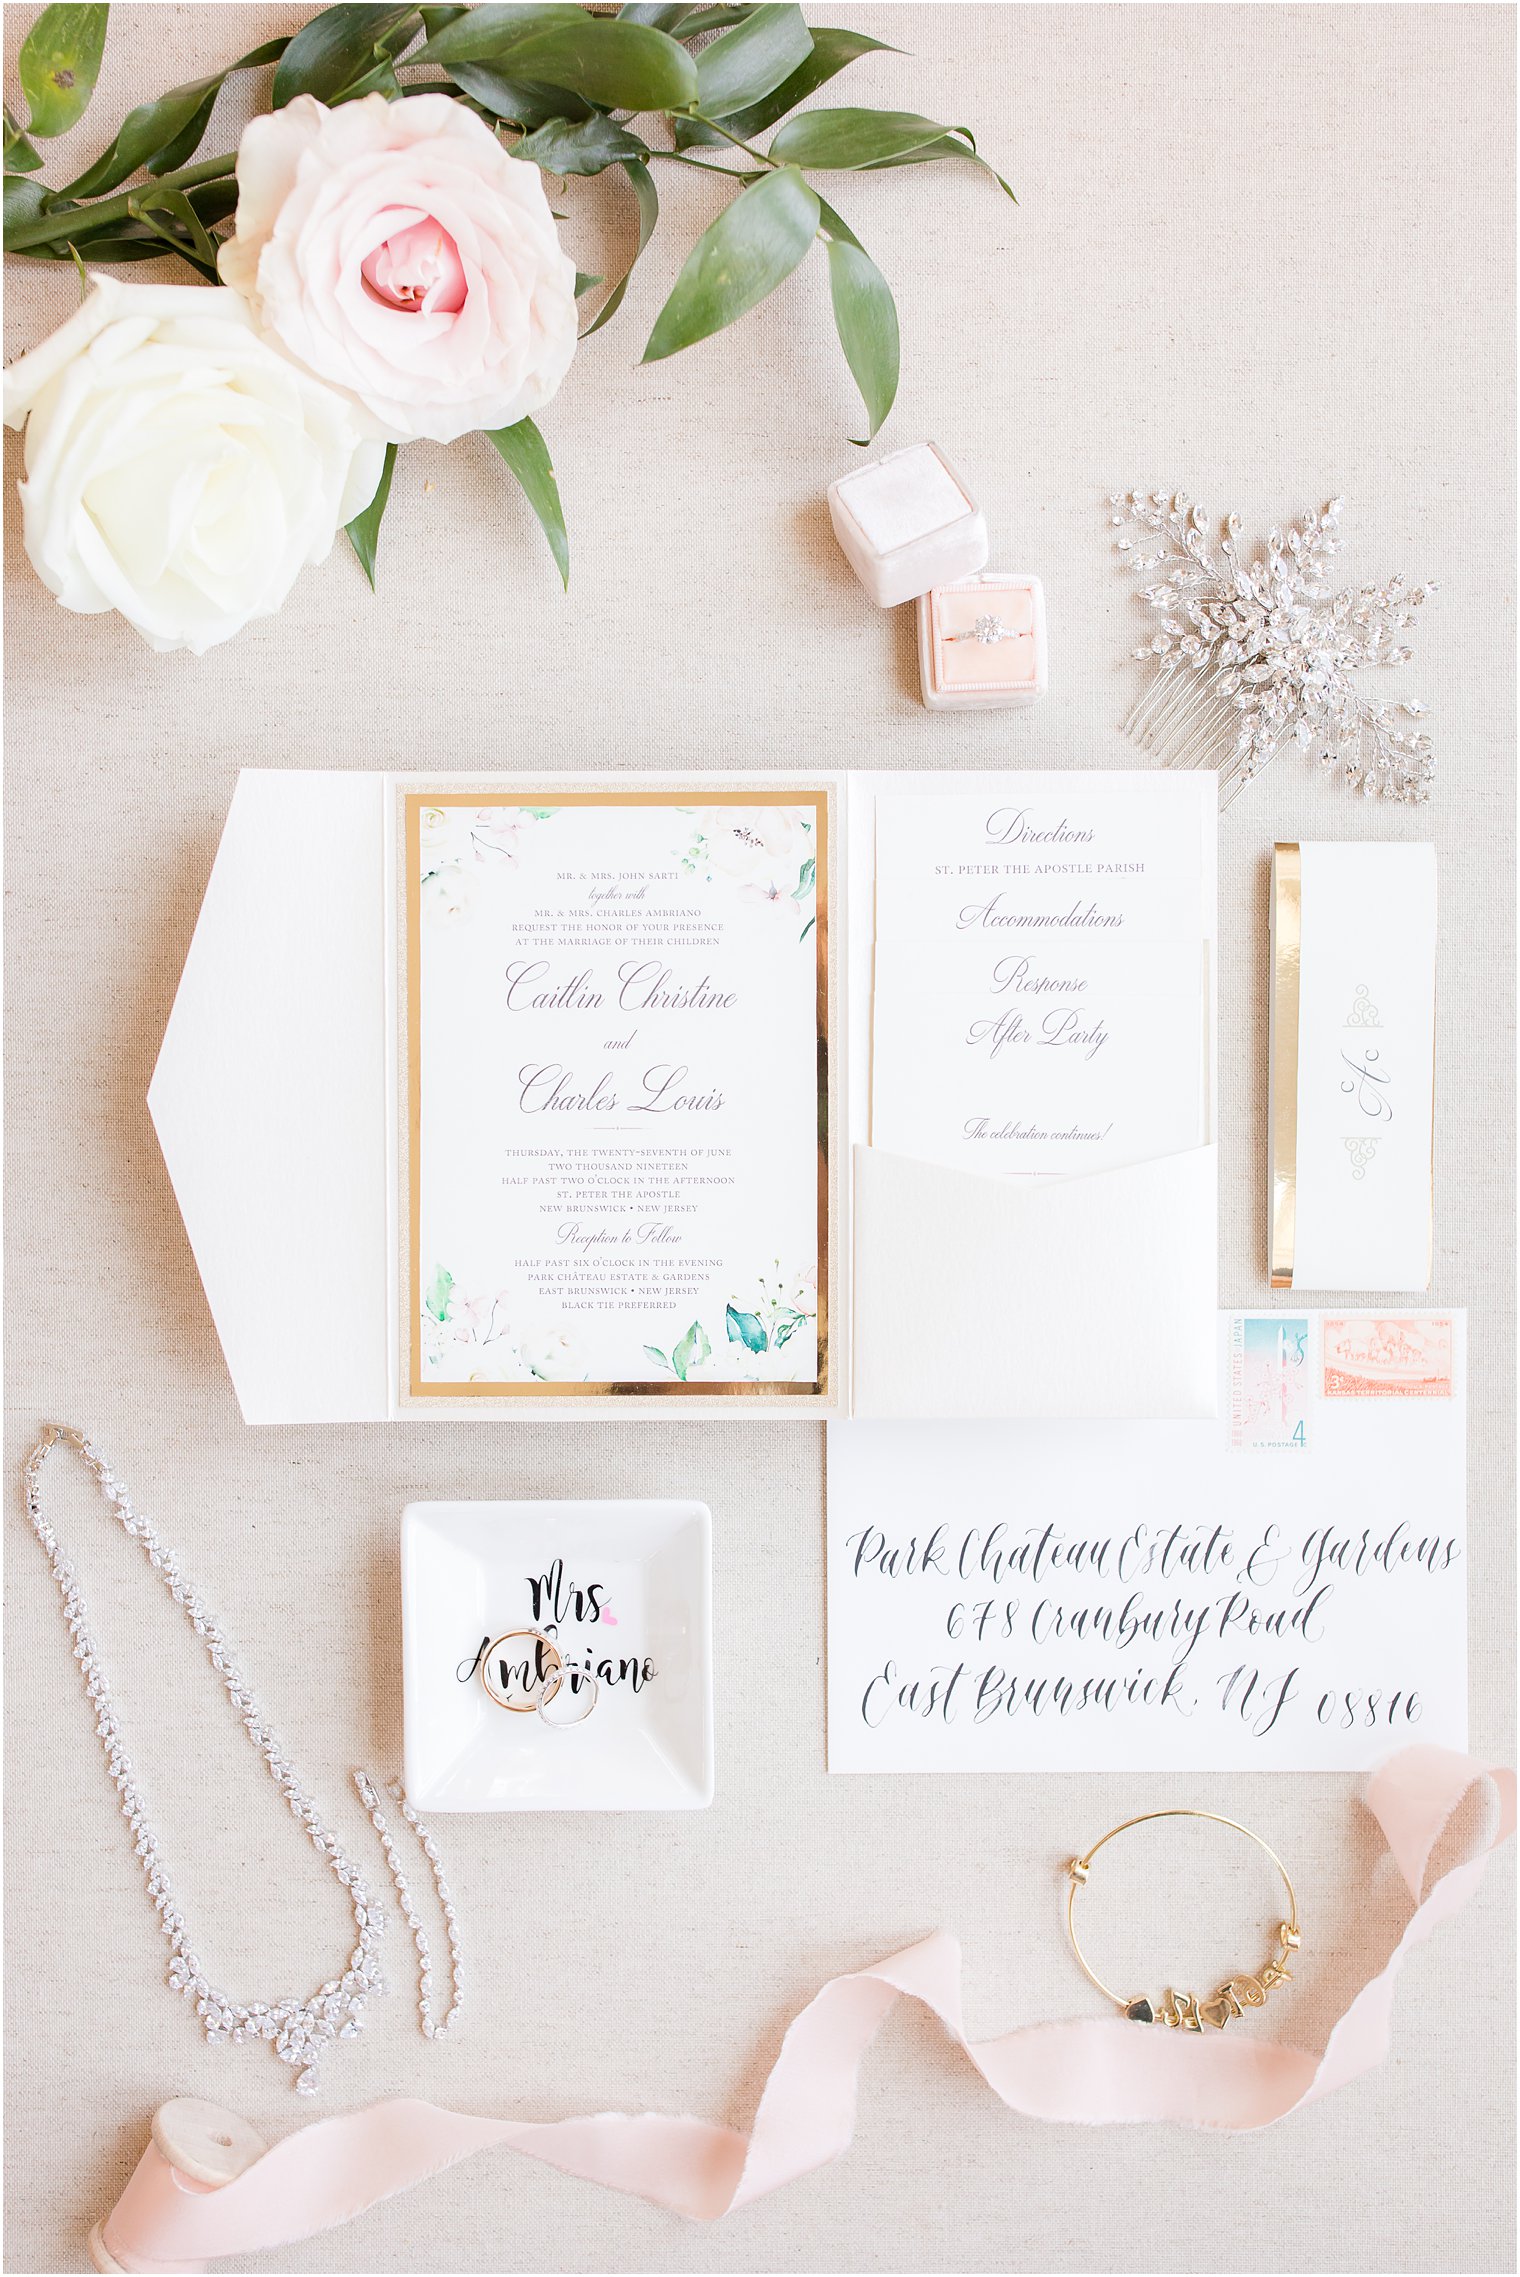 Timeless wedding invitation by Art Paper Scissor